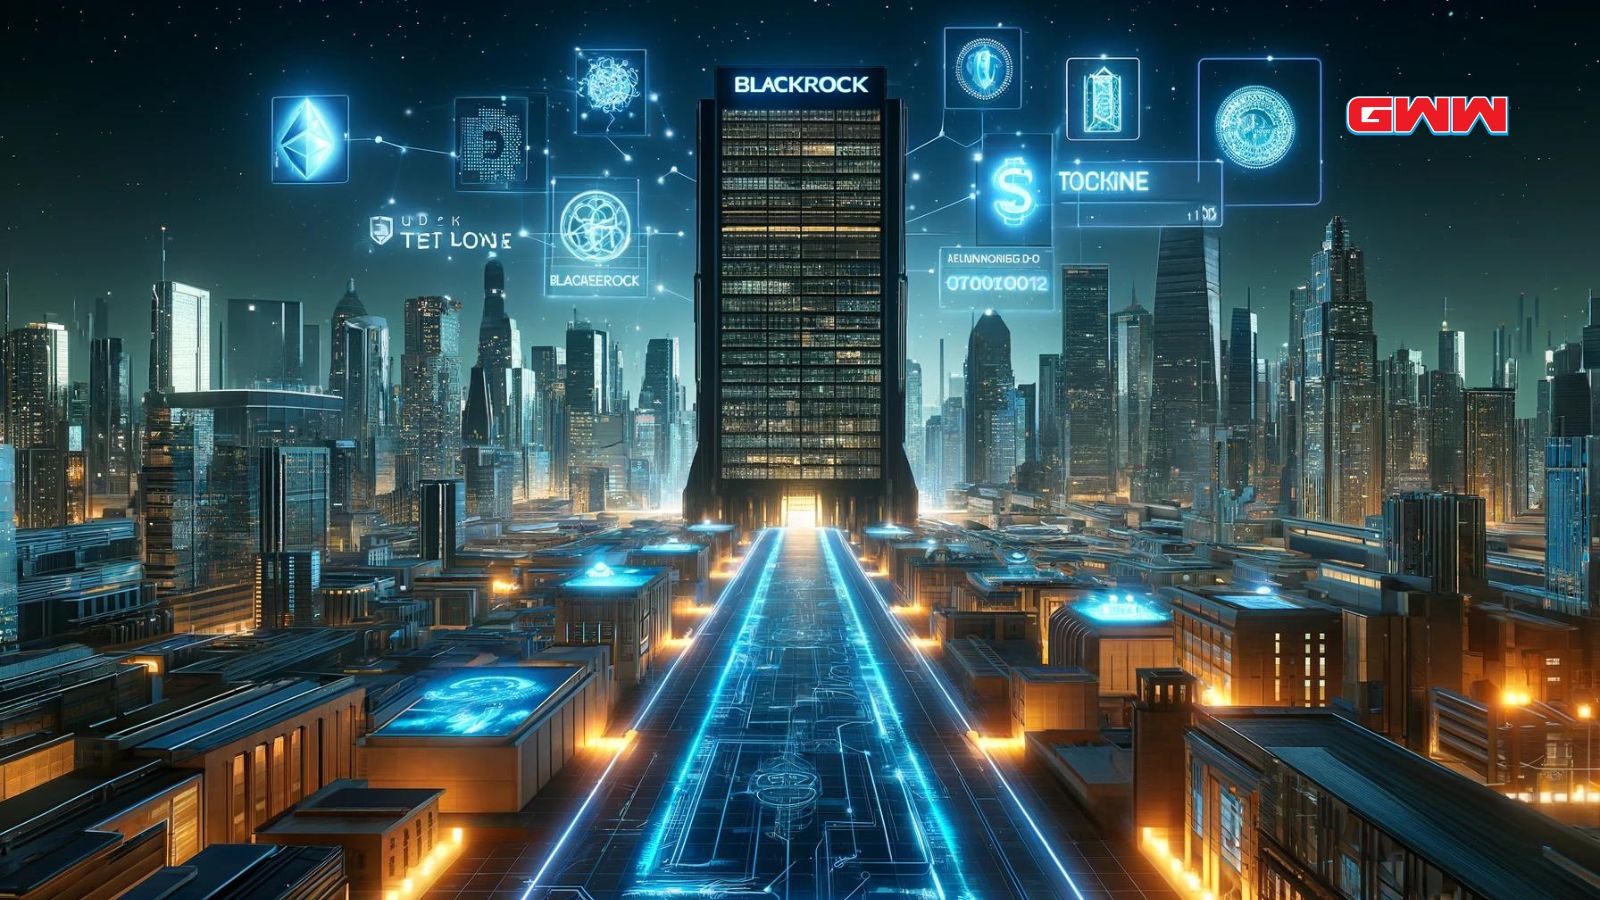 Futuristic skyline highlighting BlackRock's tokenization